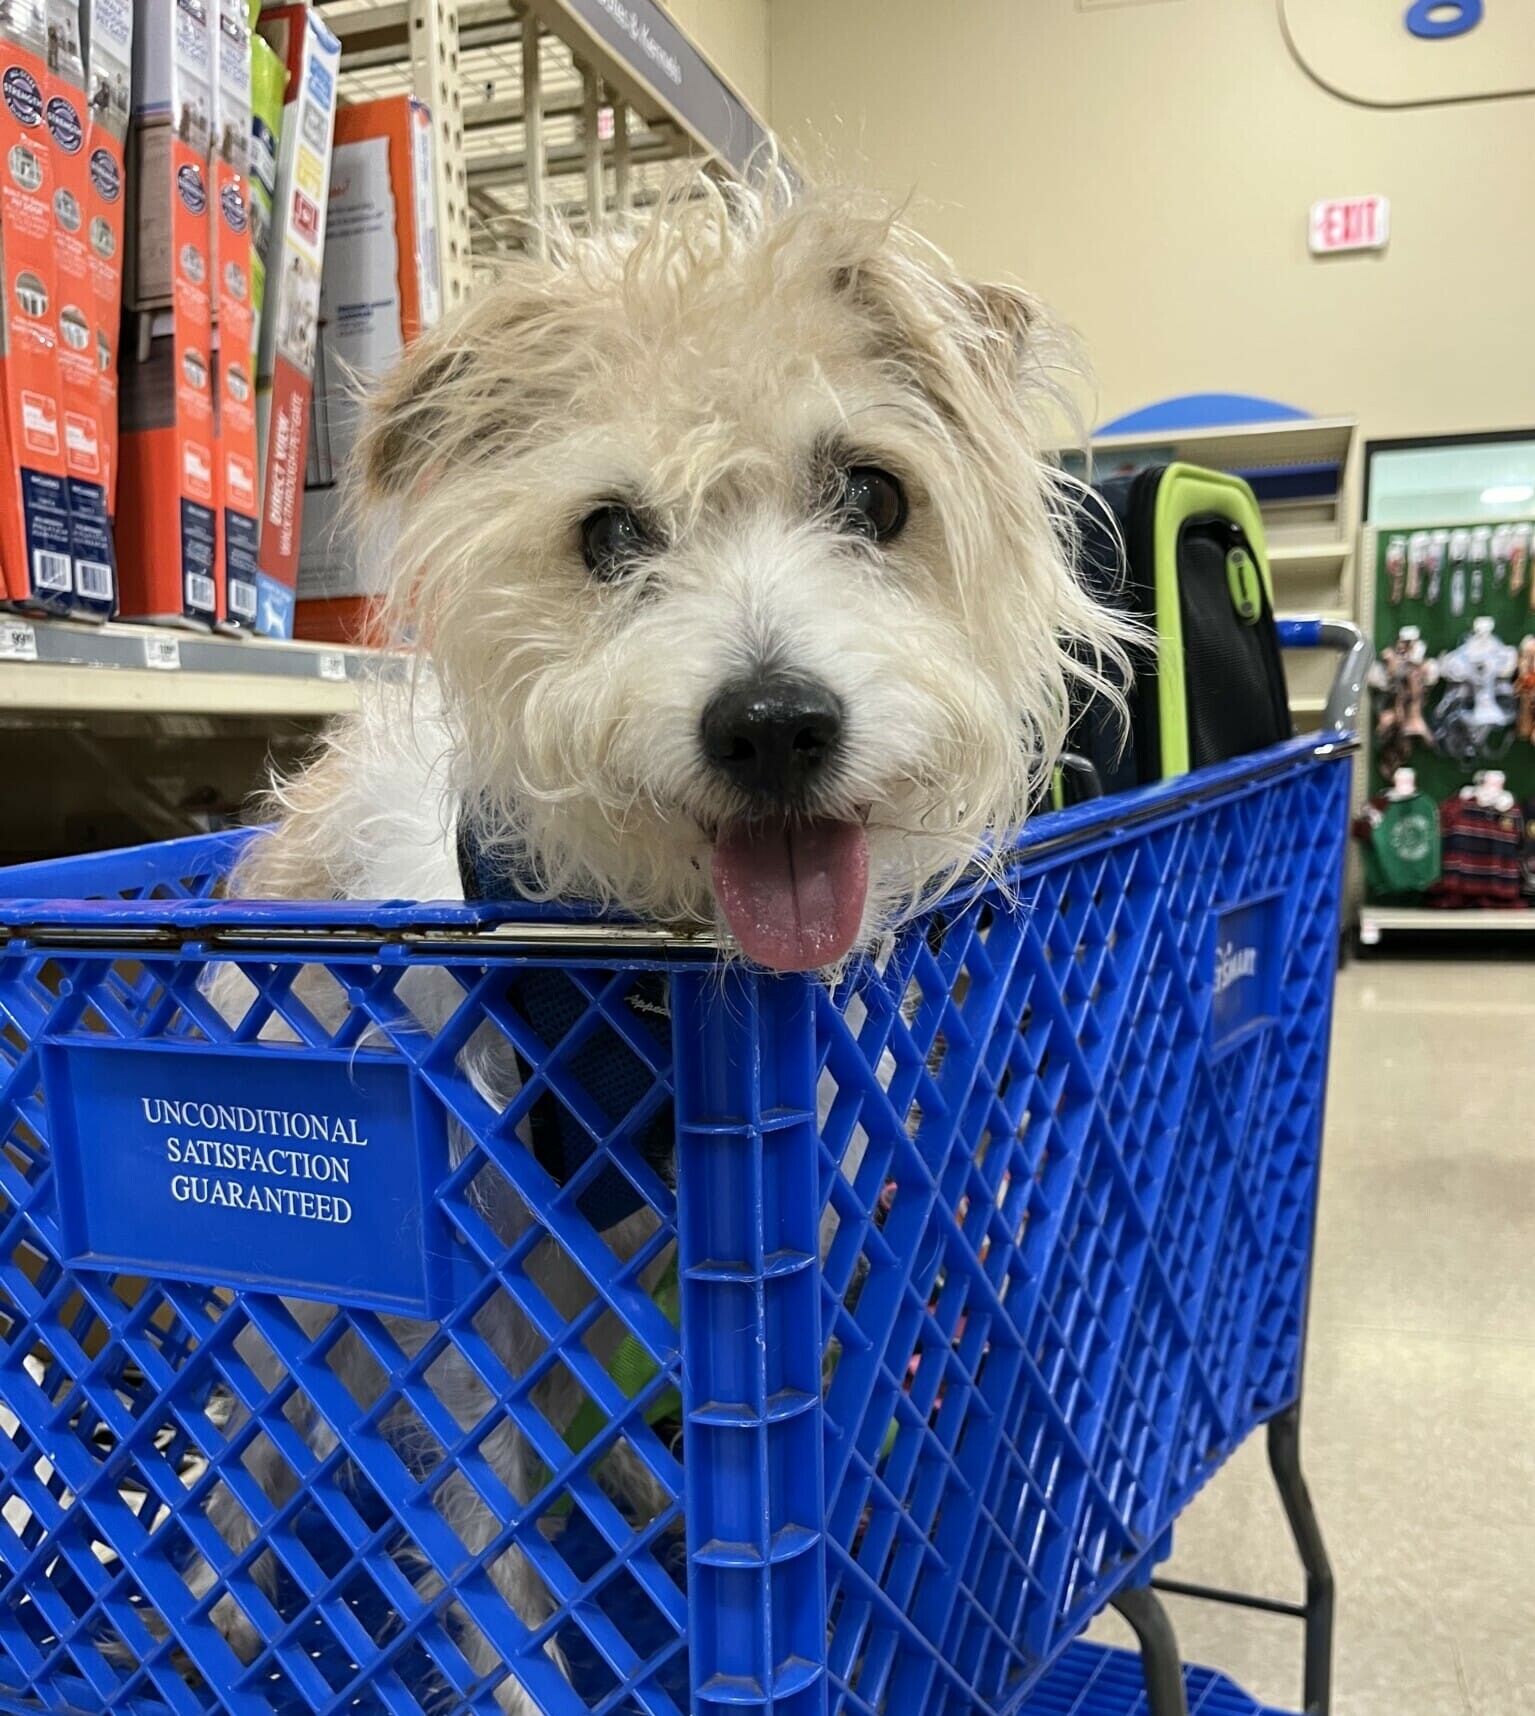 Sir Alex the pup rides in a shopping cart.